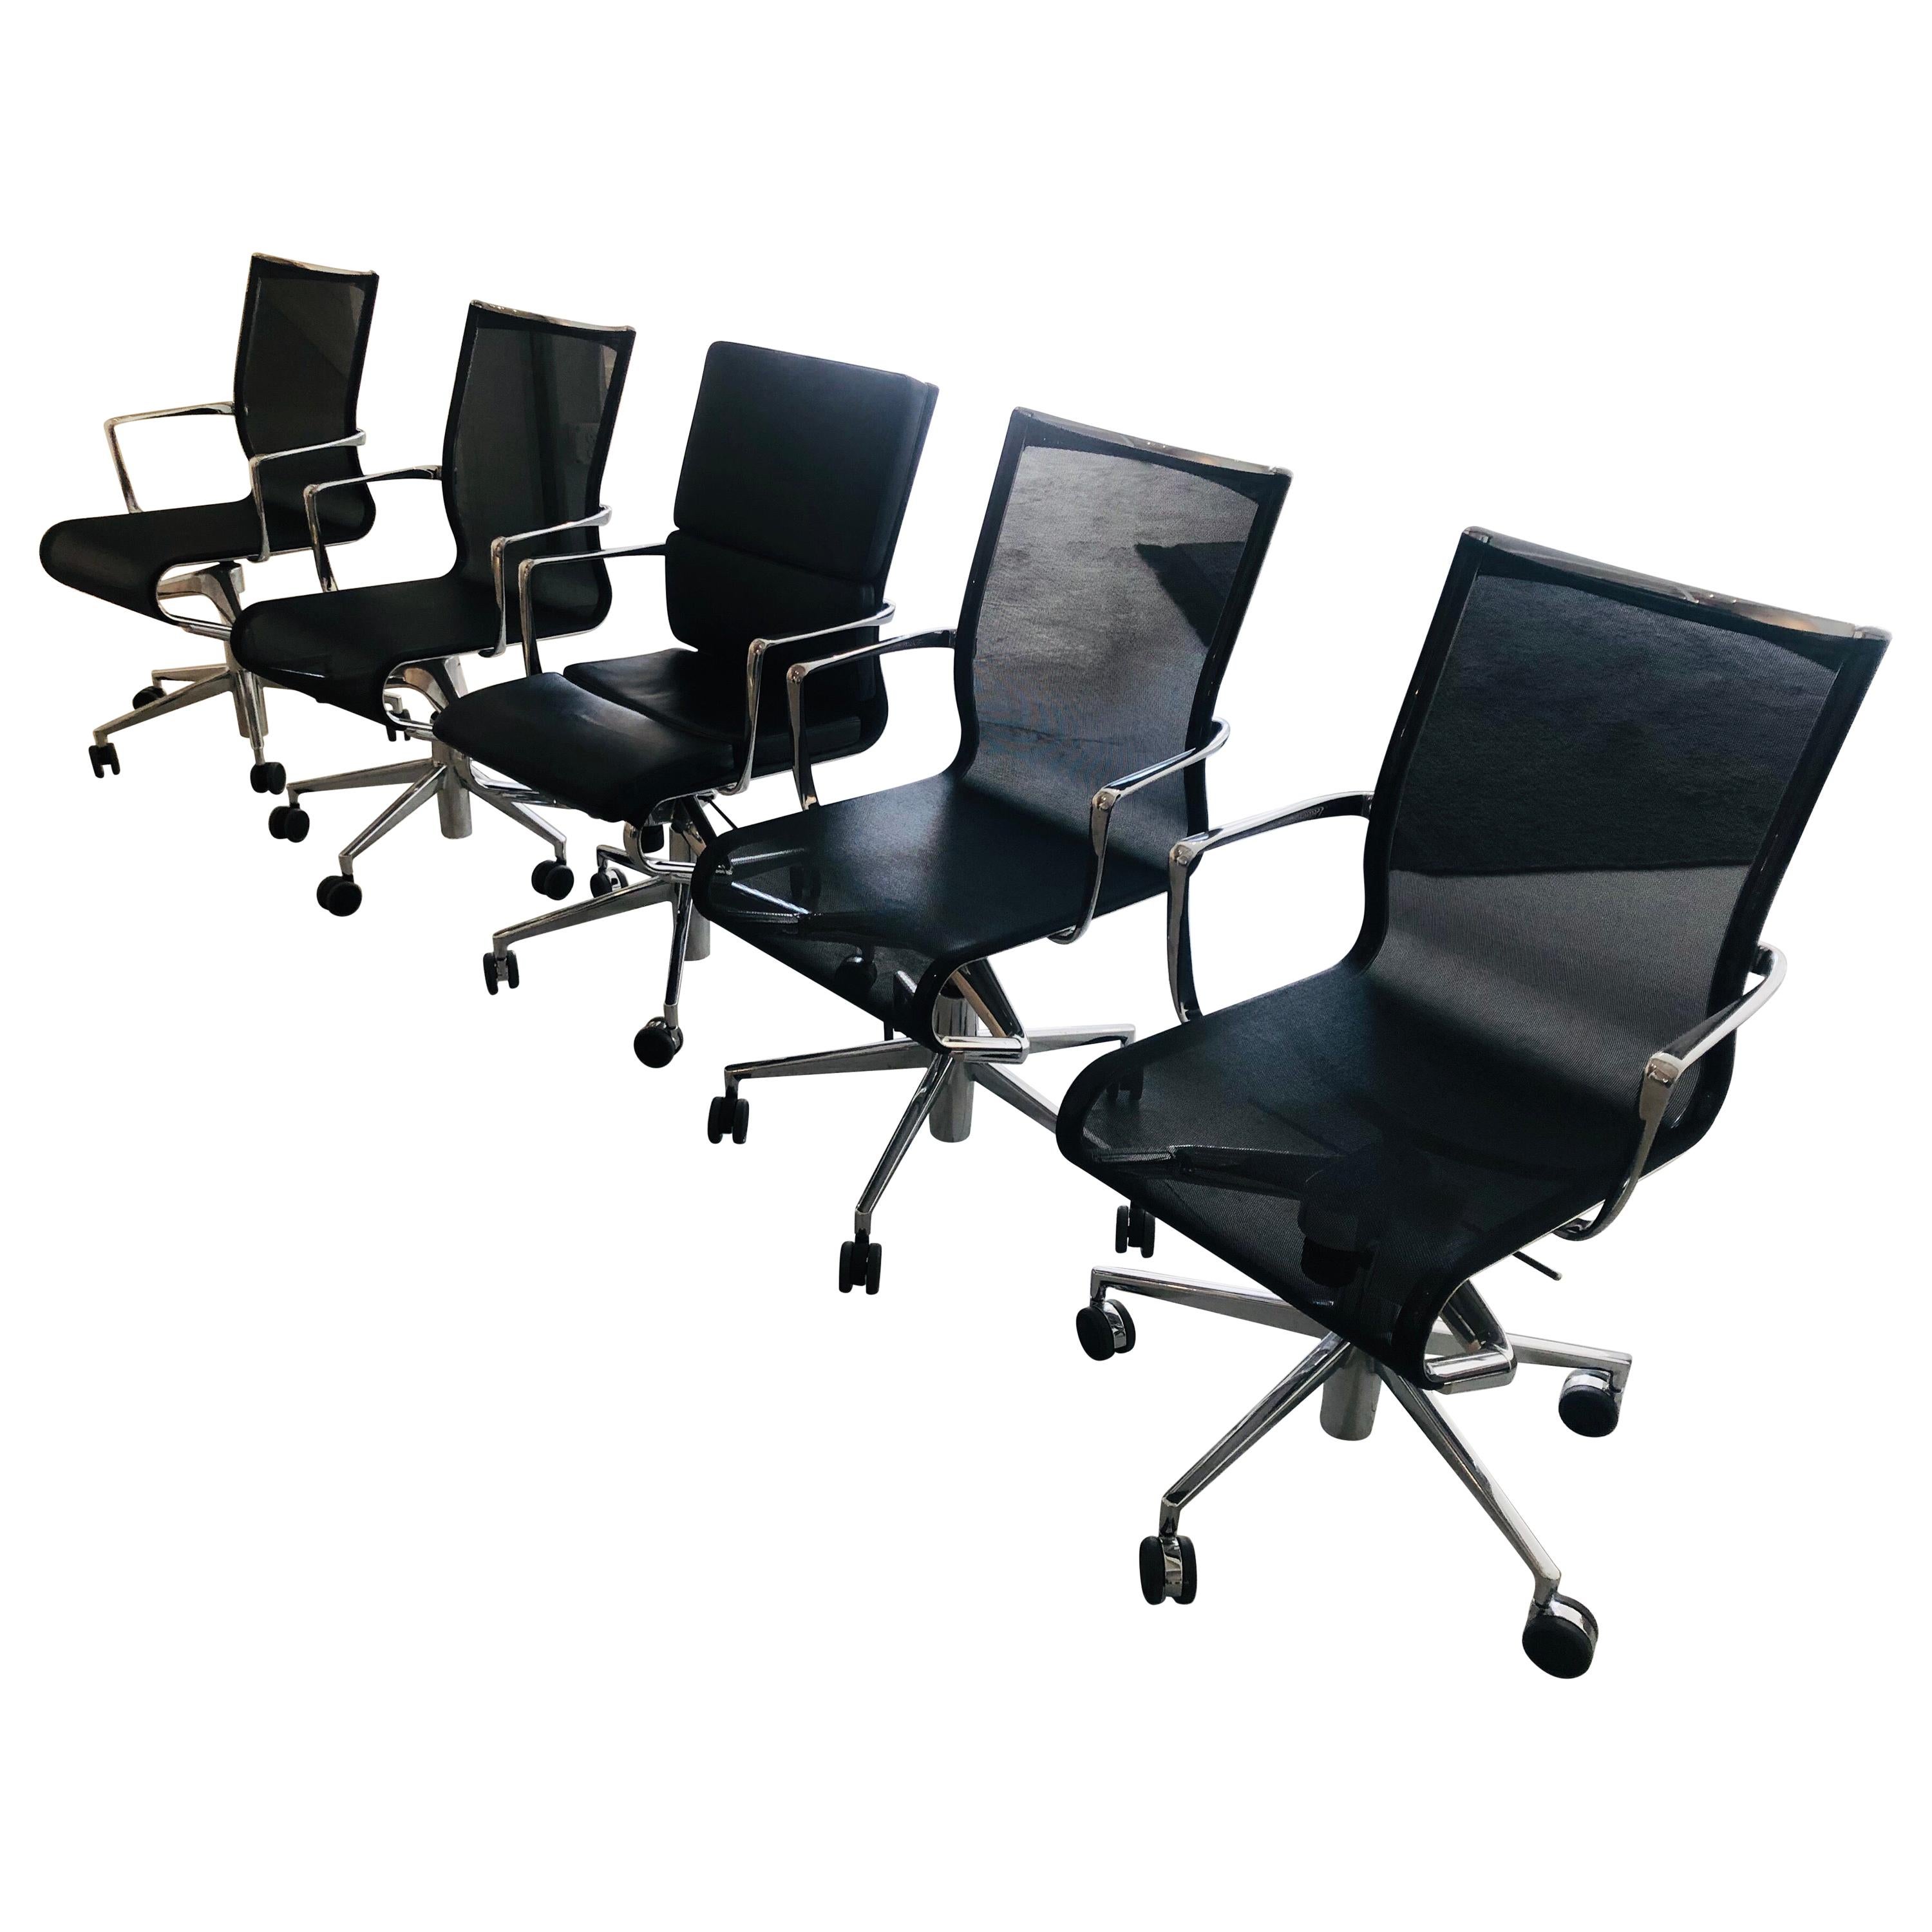 Set of 6 Modern Black Office Chairs, Rolling Swivel, Arms, Alberto Meda Alias